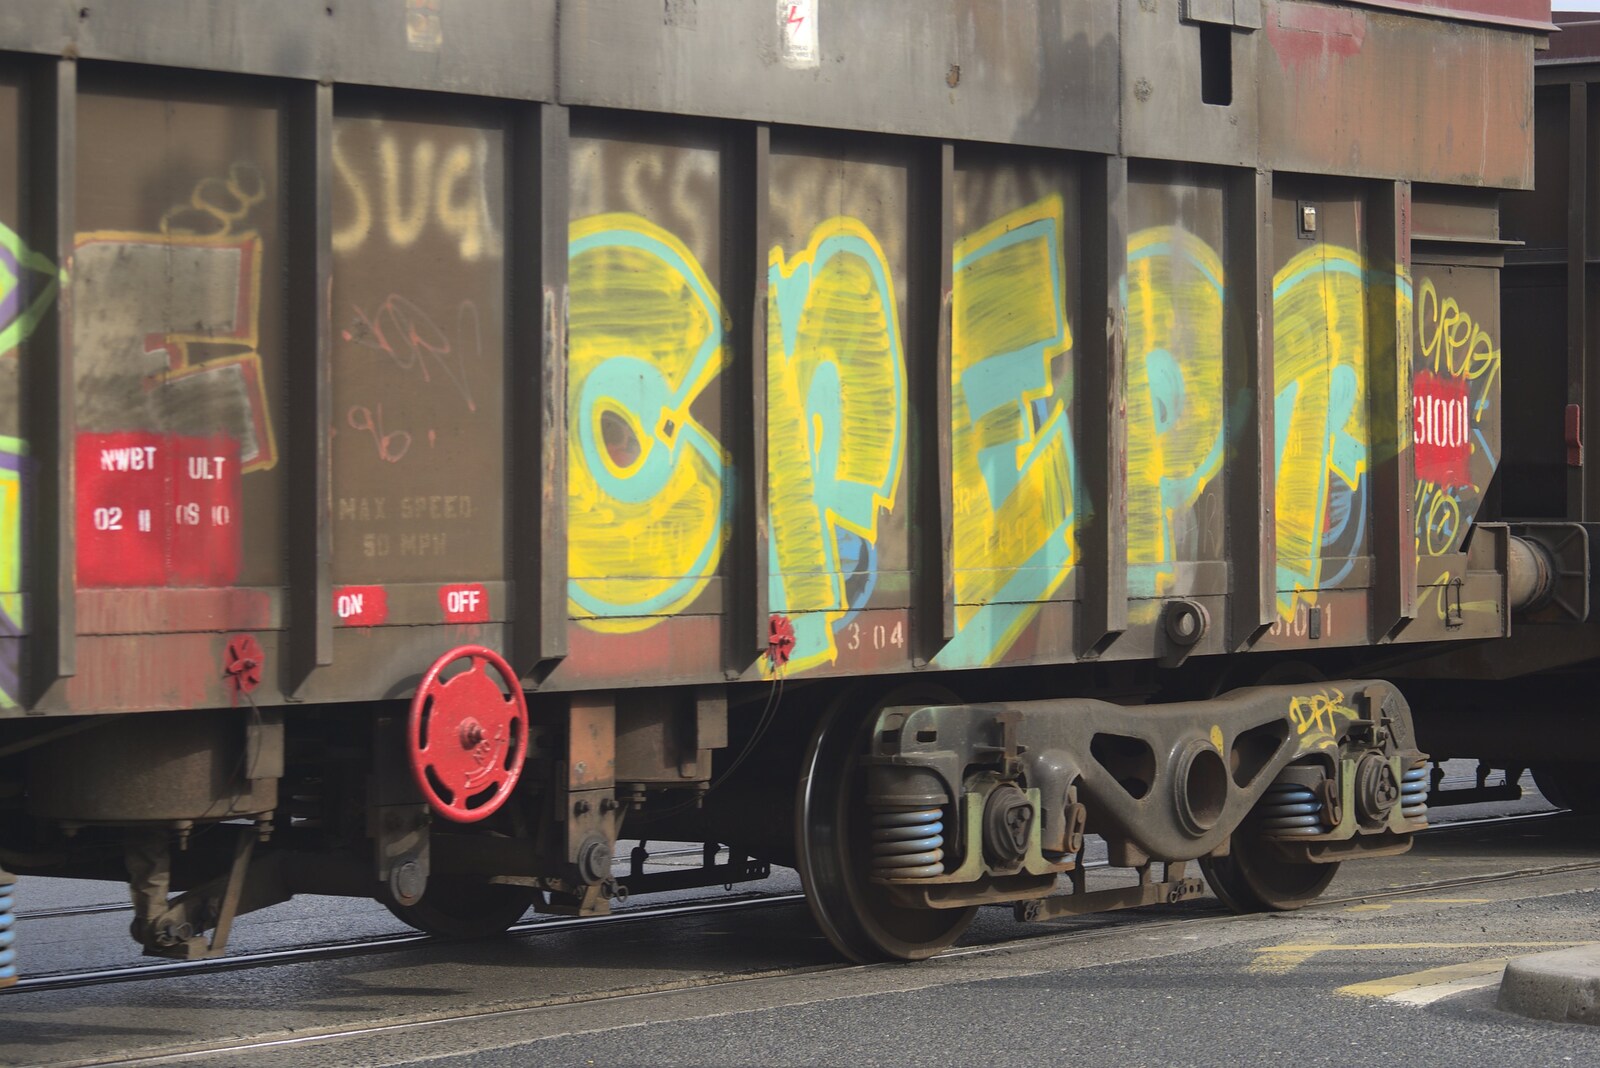 Goods wagon graffiti from A Week in Monkstown, County Dublin, Ireland - 1st March 2011